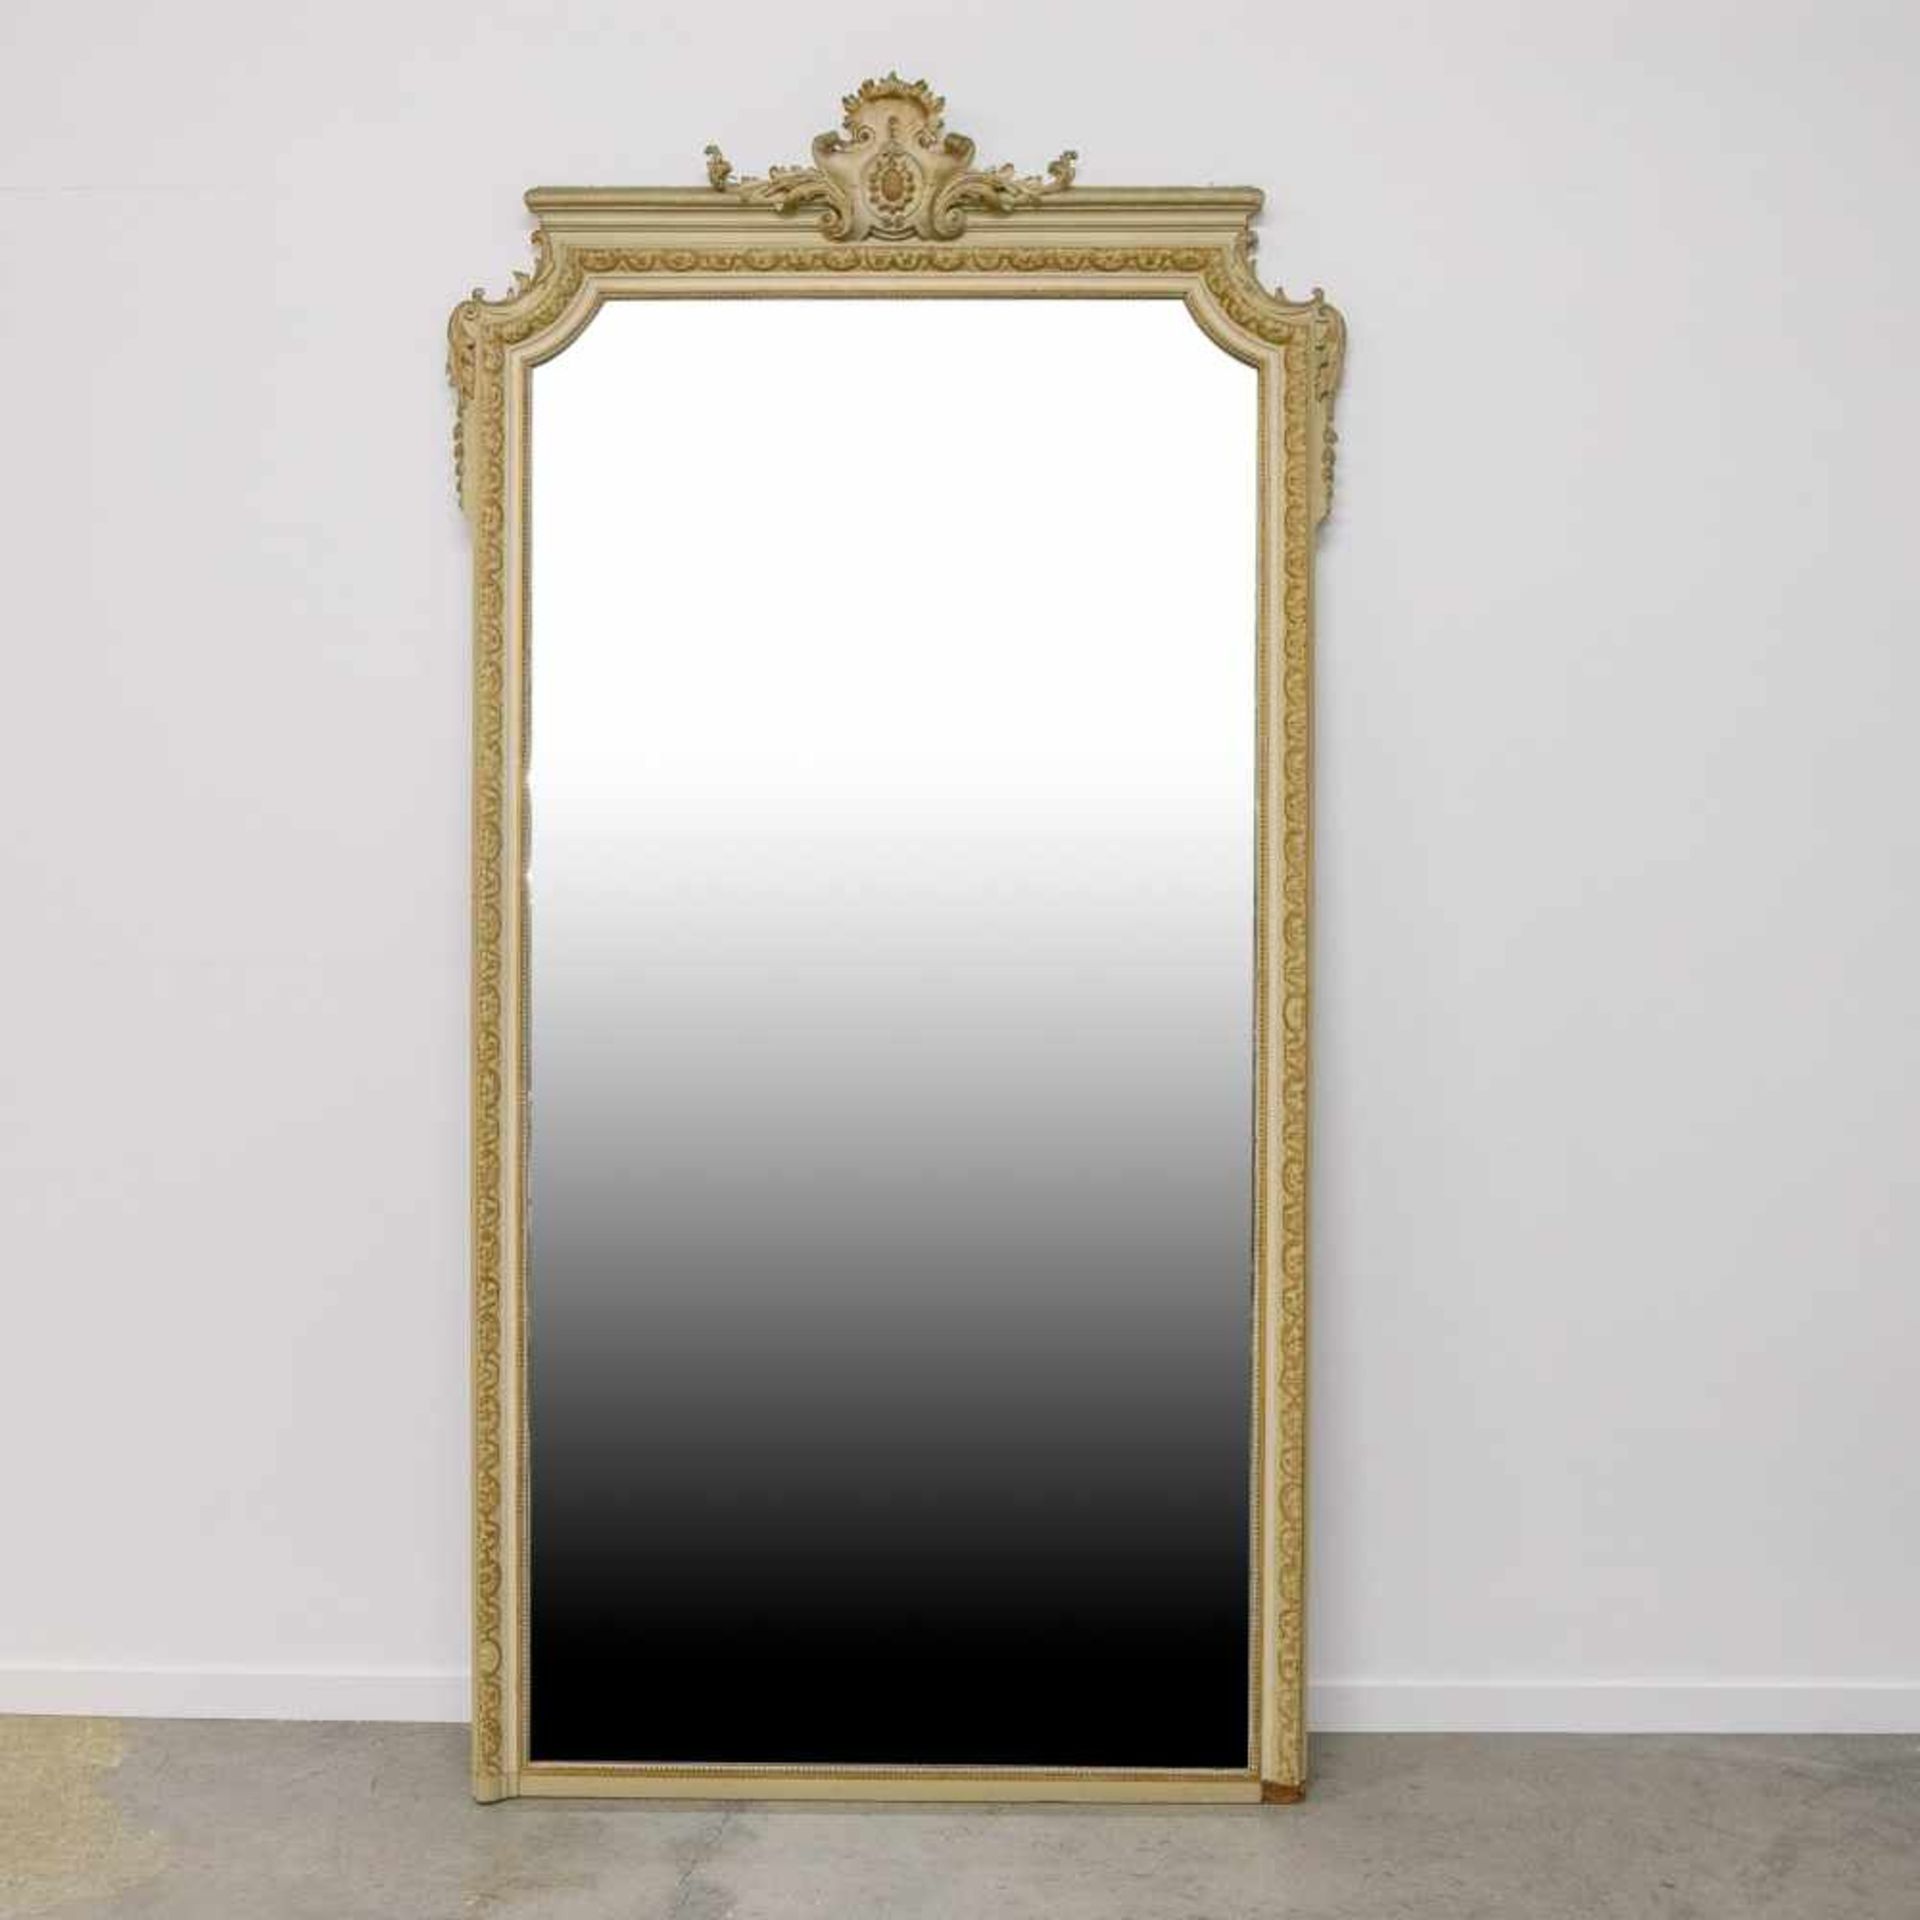 Large standing mirror Length: 0 cm , Width: 138 cm, Hight: 262 cm, Diameter: 0 cm